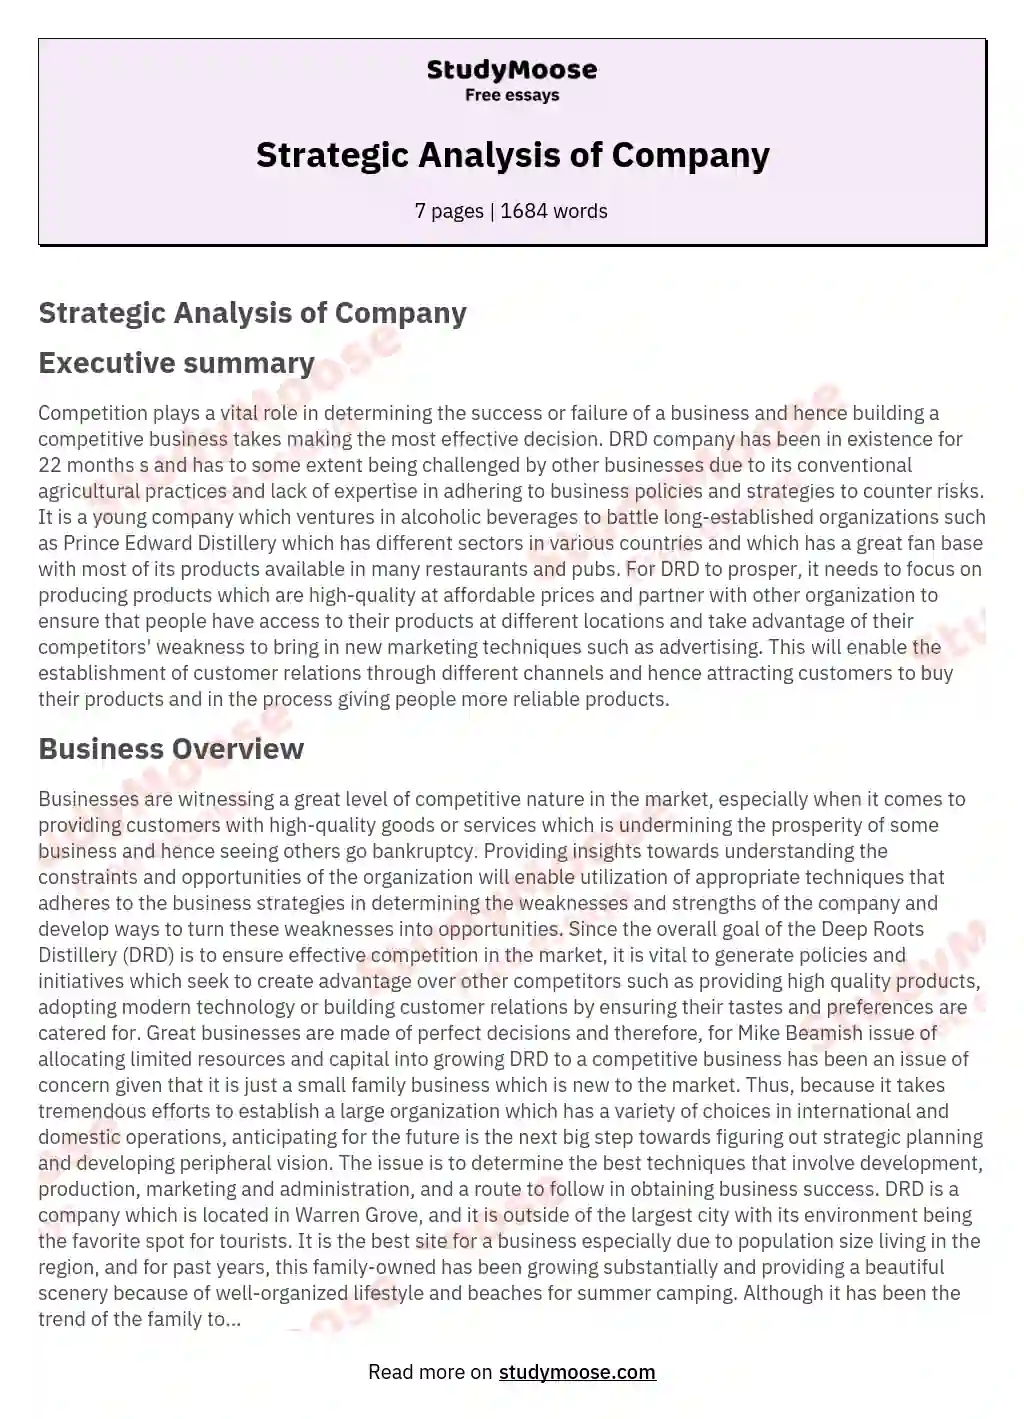 Strategic Analysis of Company essay